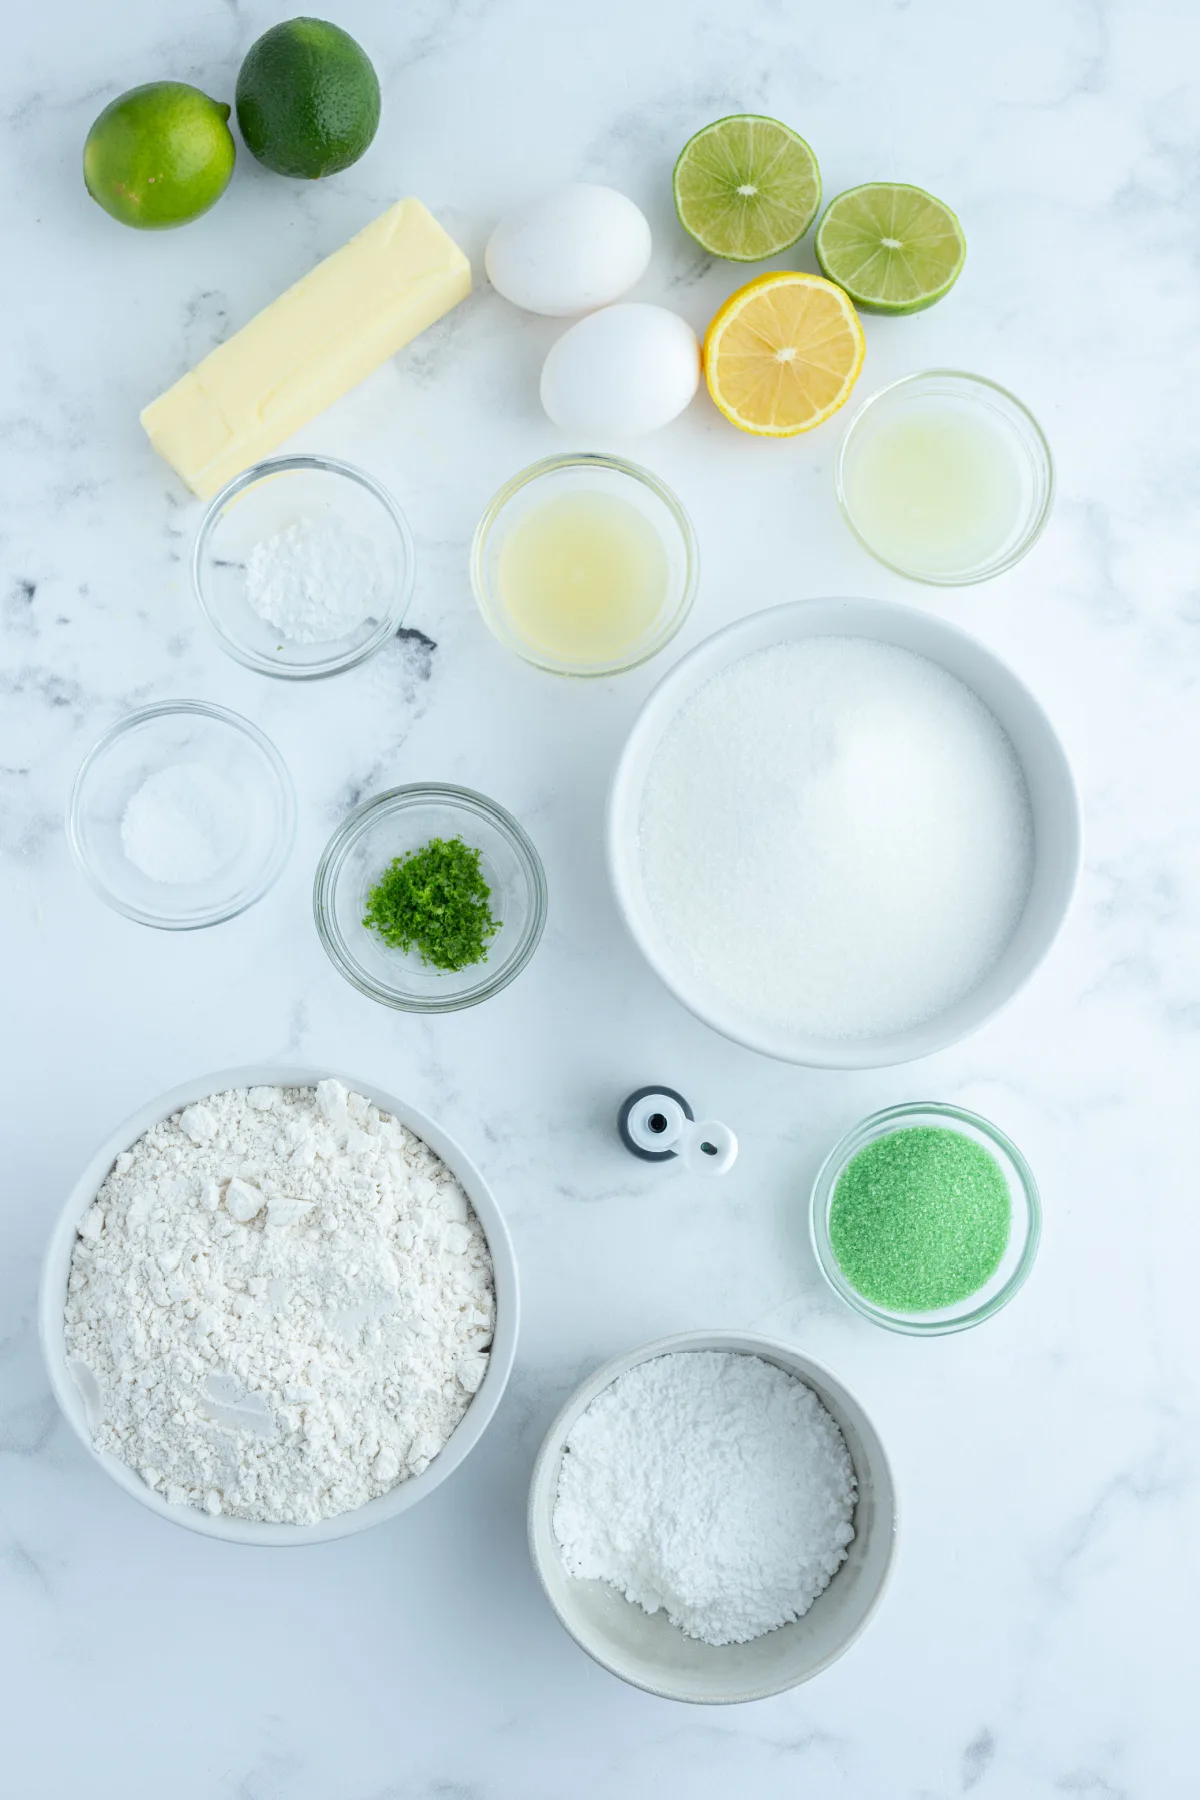 ingredients displayed for making lime crackle cookies